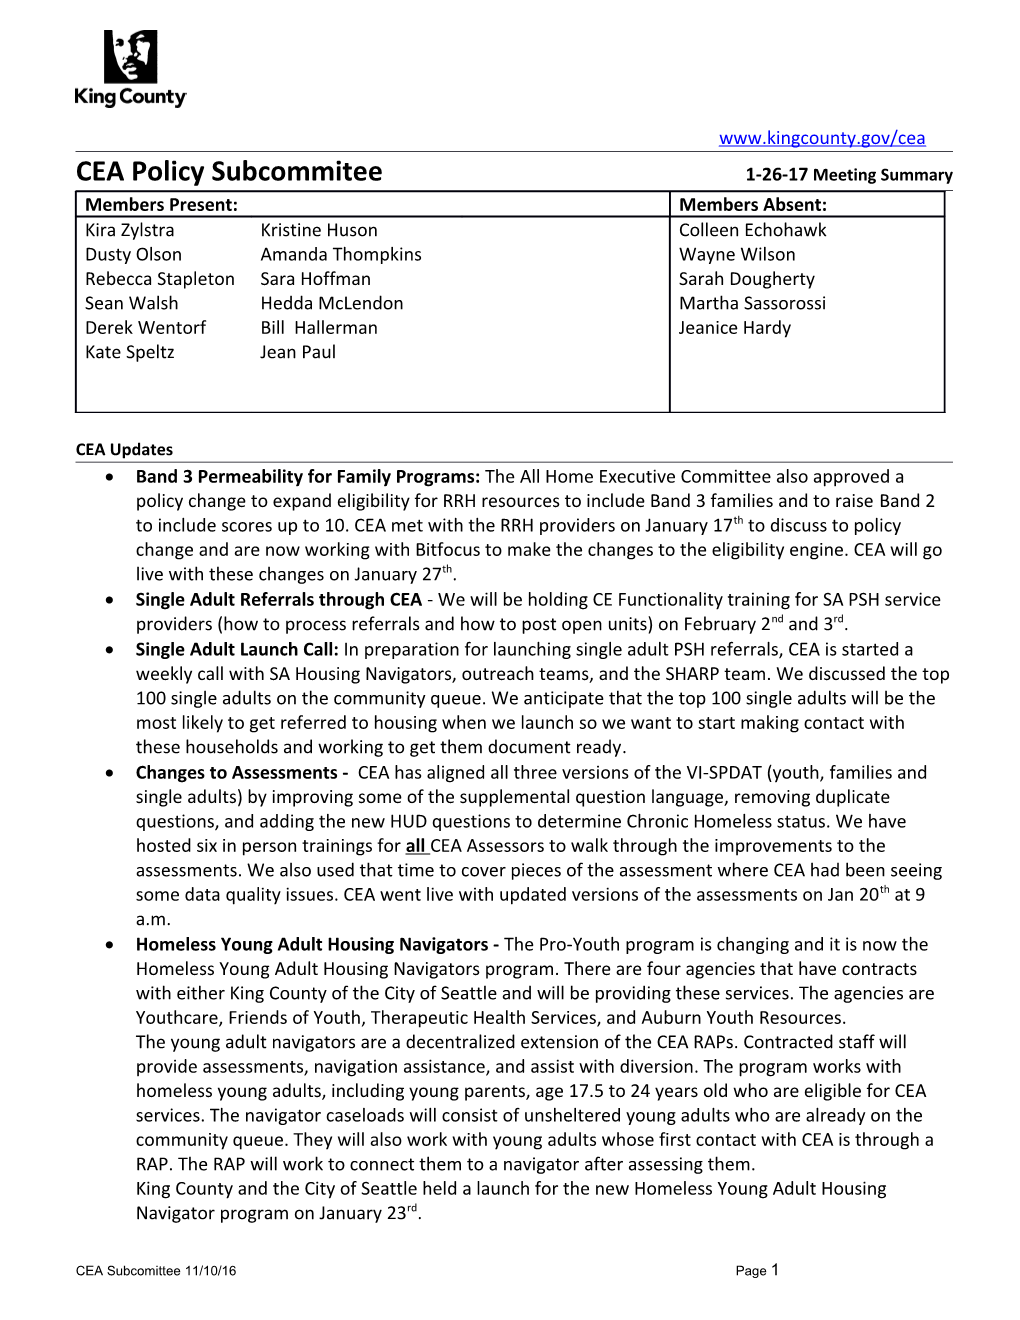 CEA Policy Subcommitee1-26-17 Meeting Summary